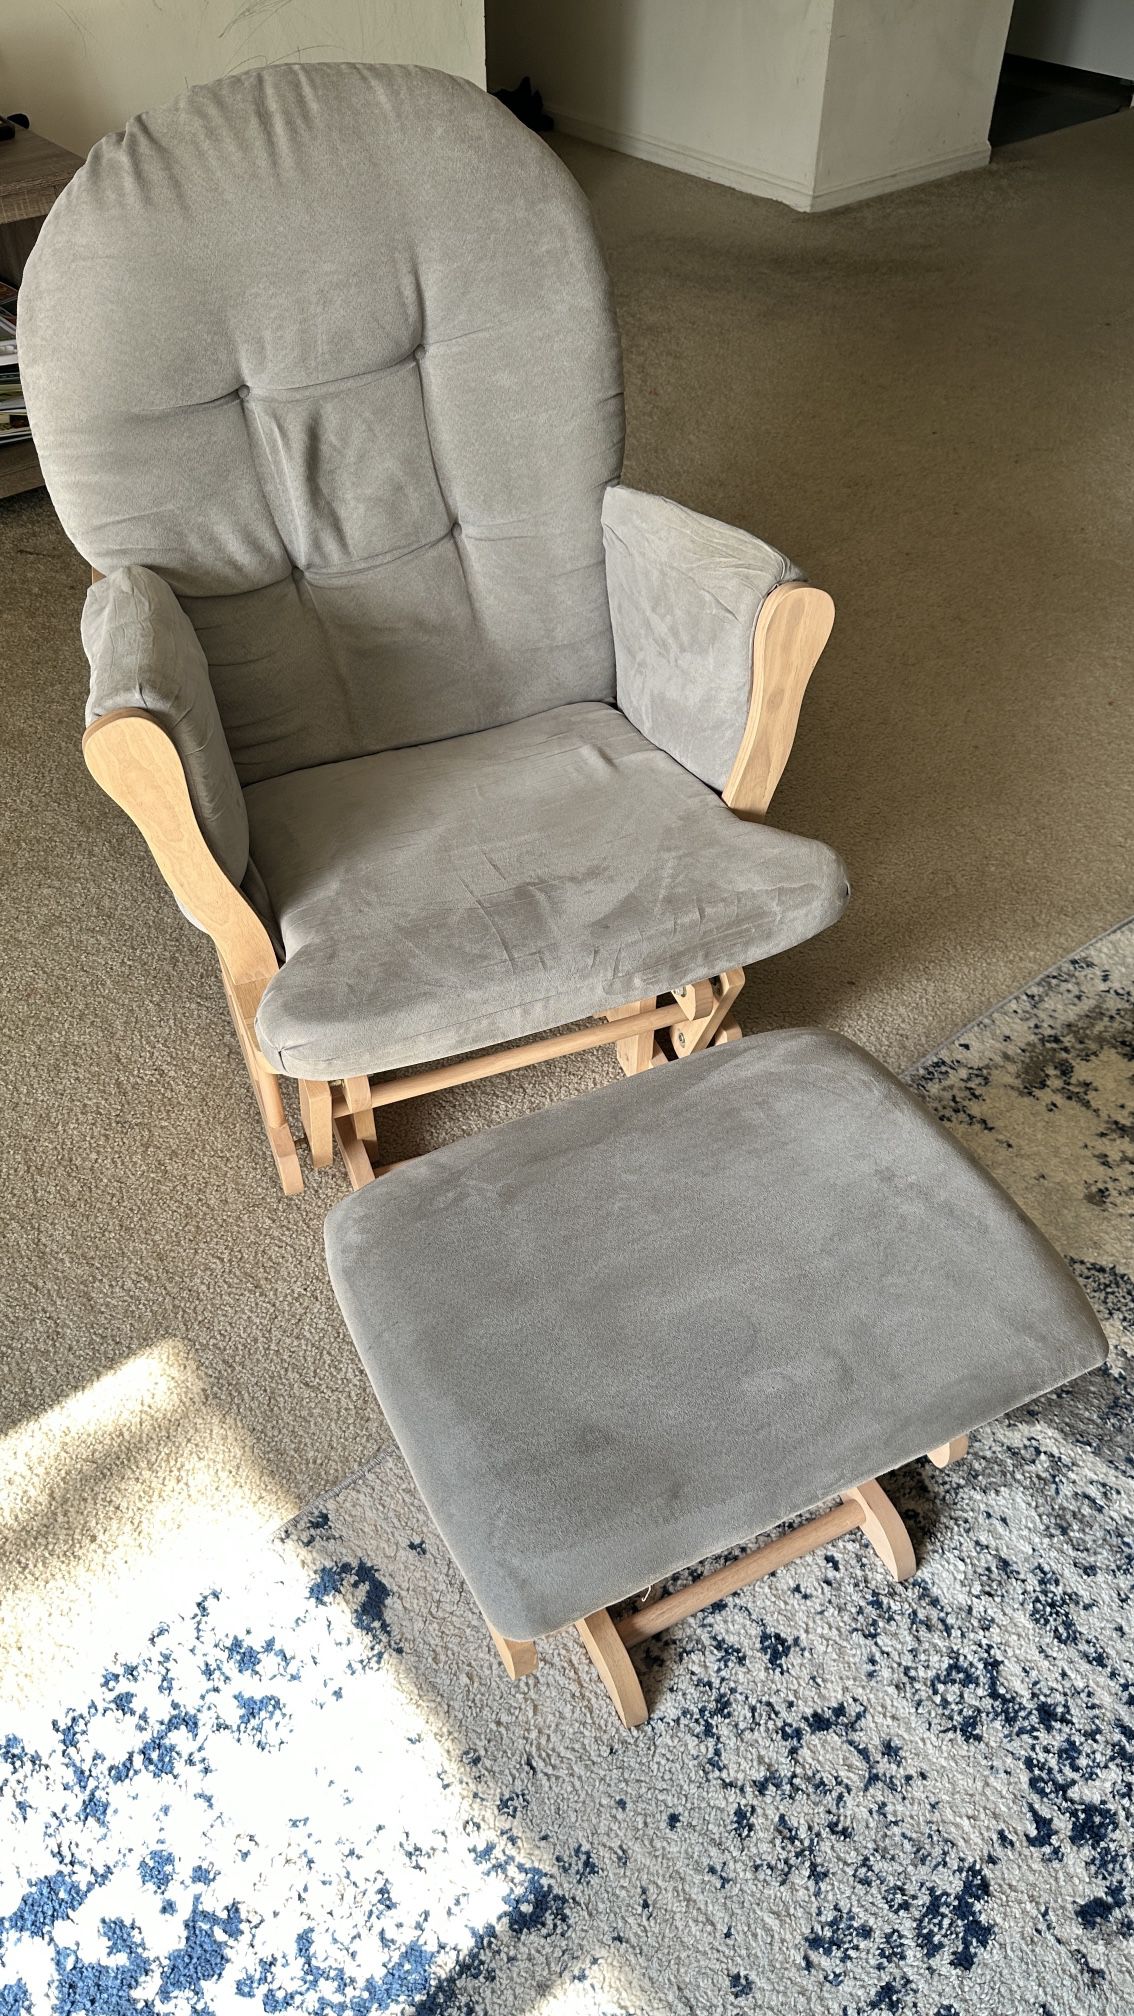 Premium Rocking Chair With Footrest 